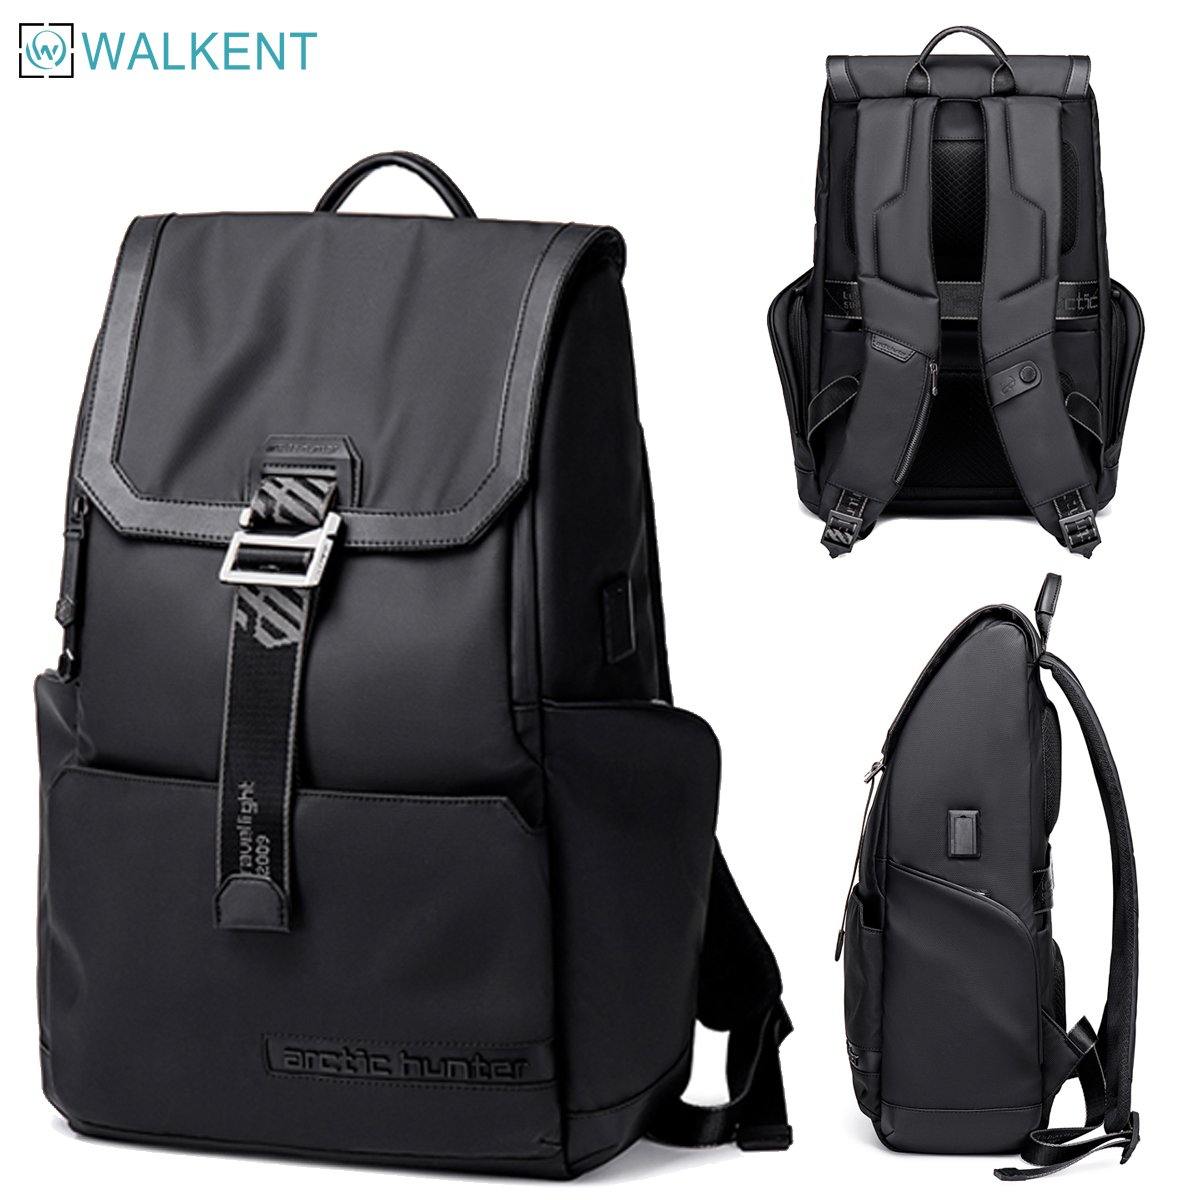 Walkent - Aura Artic Hunter Laptop Backpack